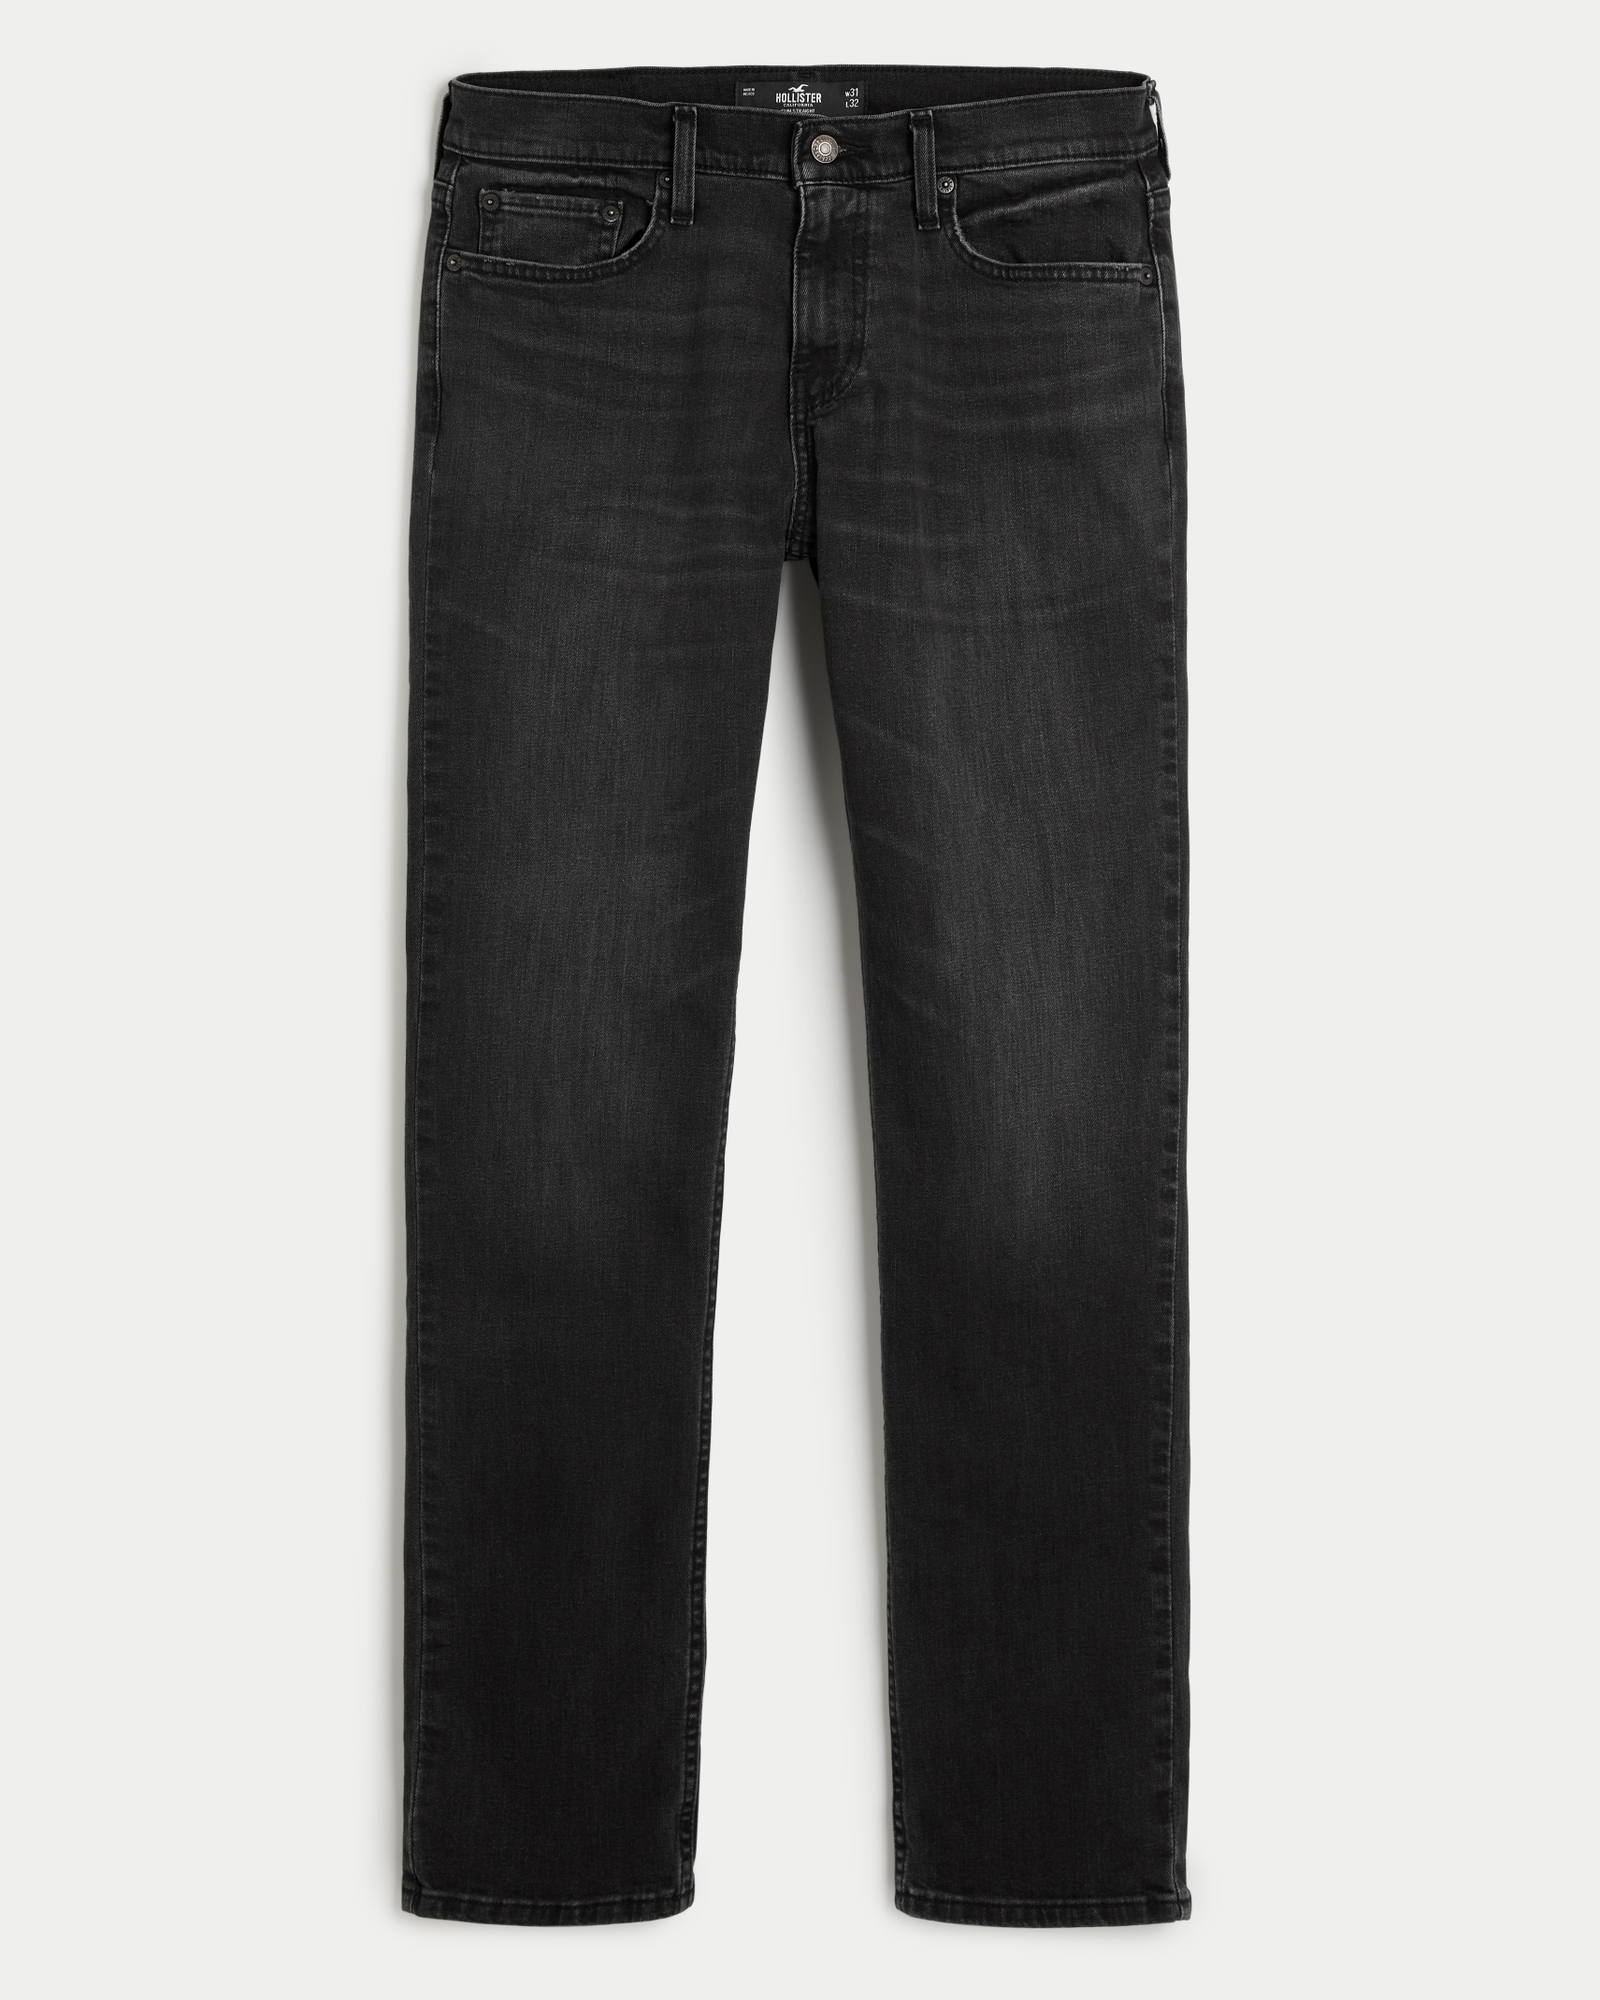 Hollister California Men's Epic Flex Slim Straight Jeans HOM-32